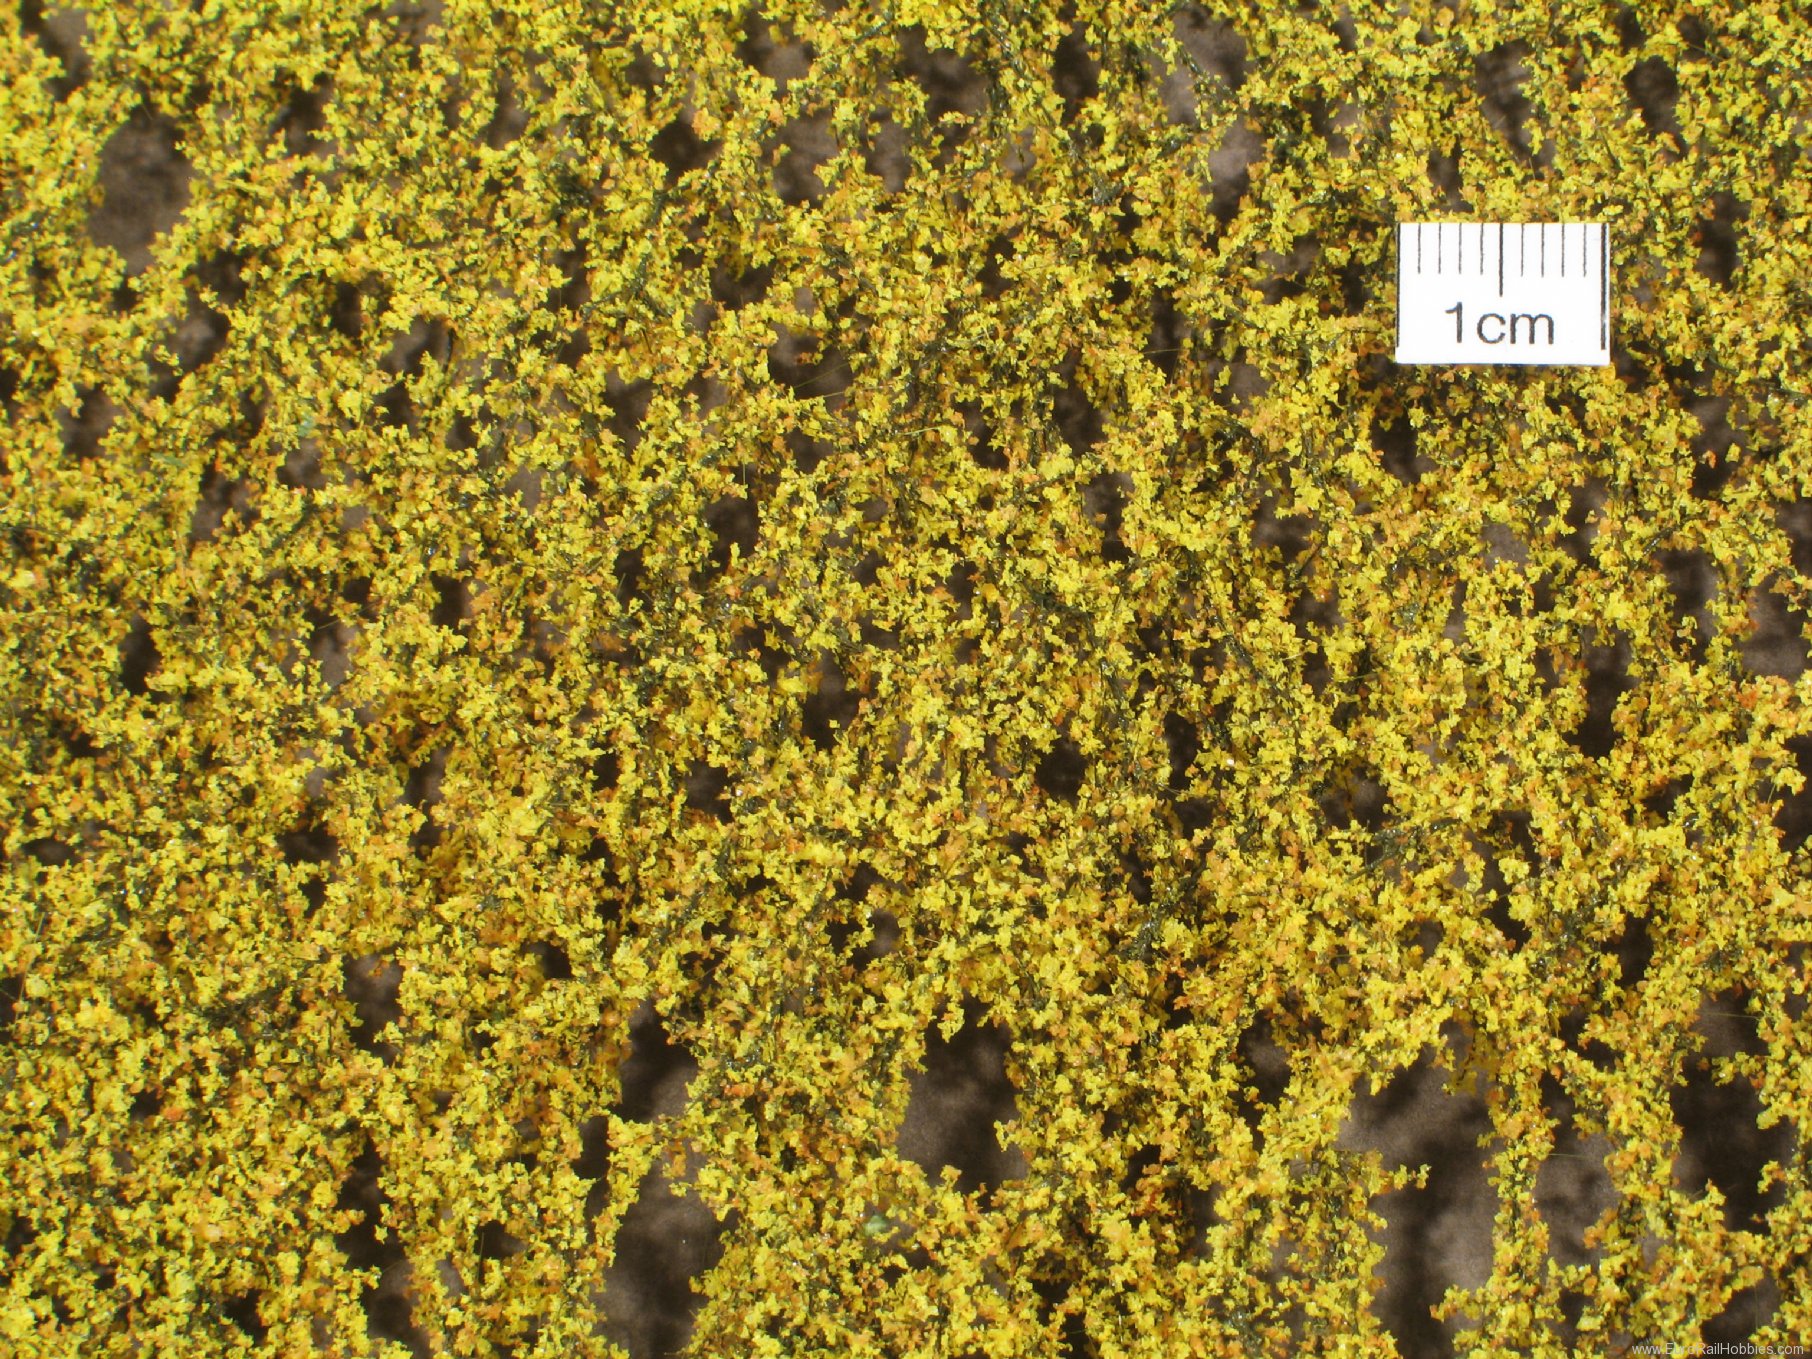 Silhouette Silflor MiniNatur 913-14 Lombardy poplar foliage, Late Fall (27x15 cm)